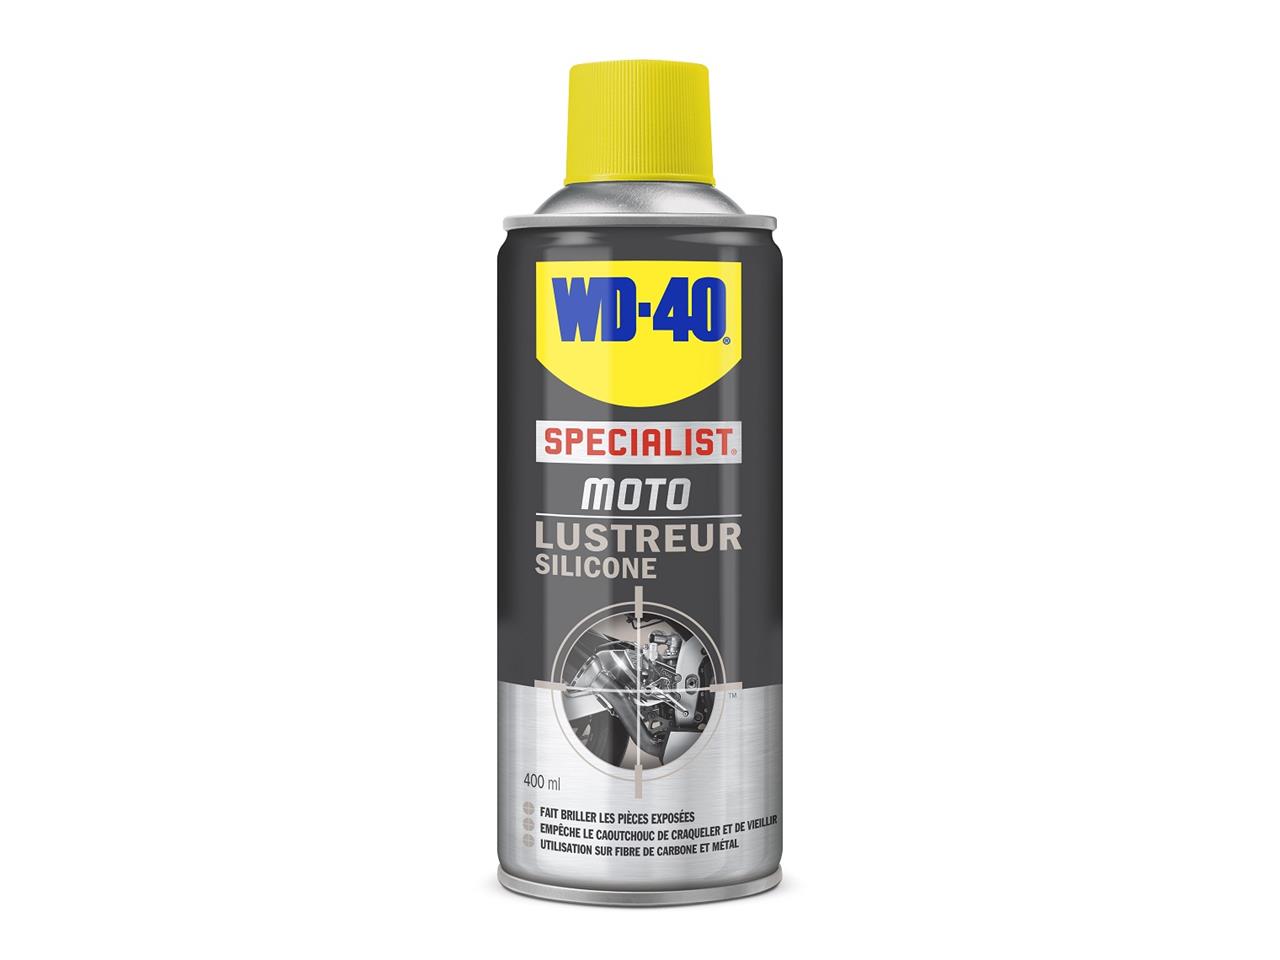 Spray lubrifiant SPECIALIST MOTO LUSTREUR SILICONE WD-40 